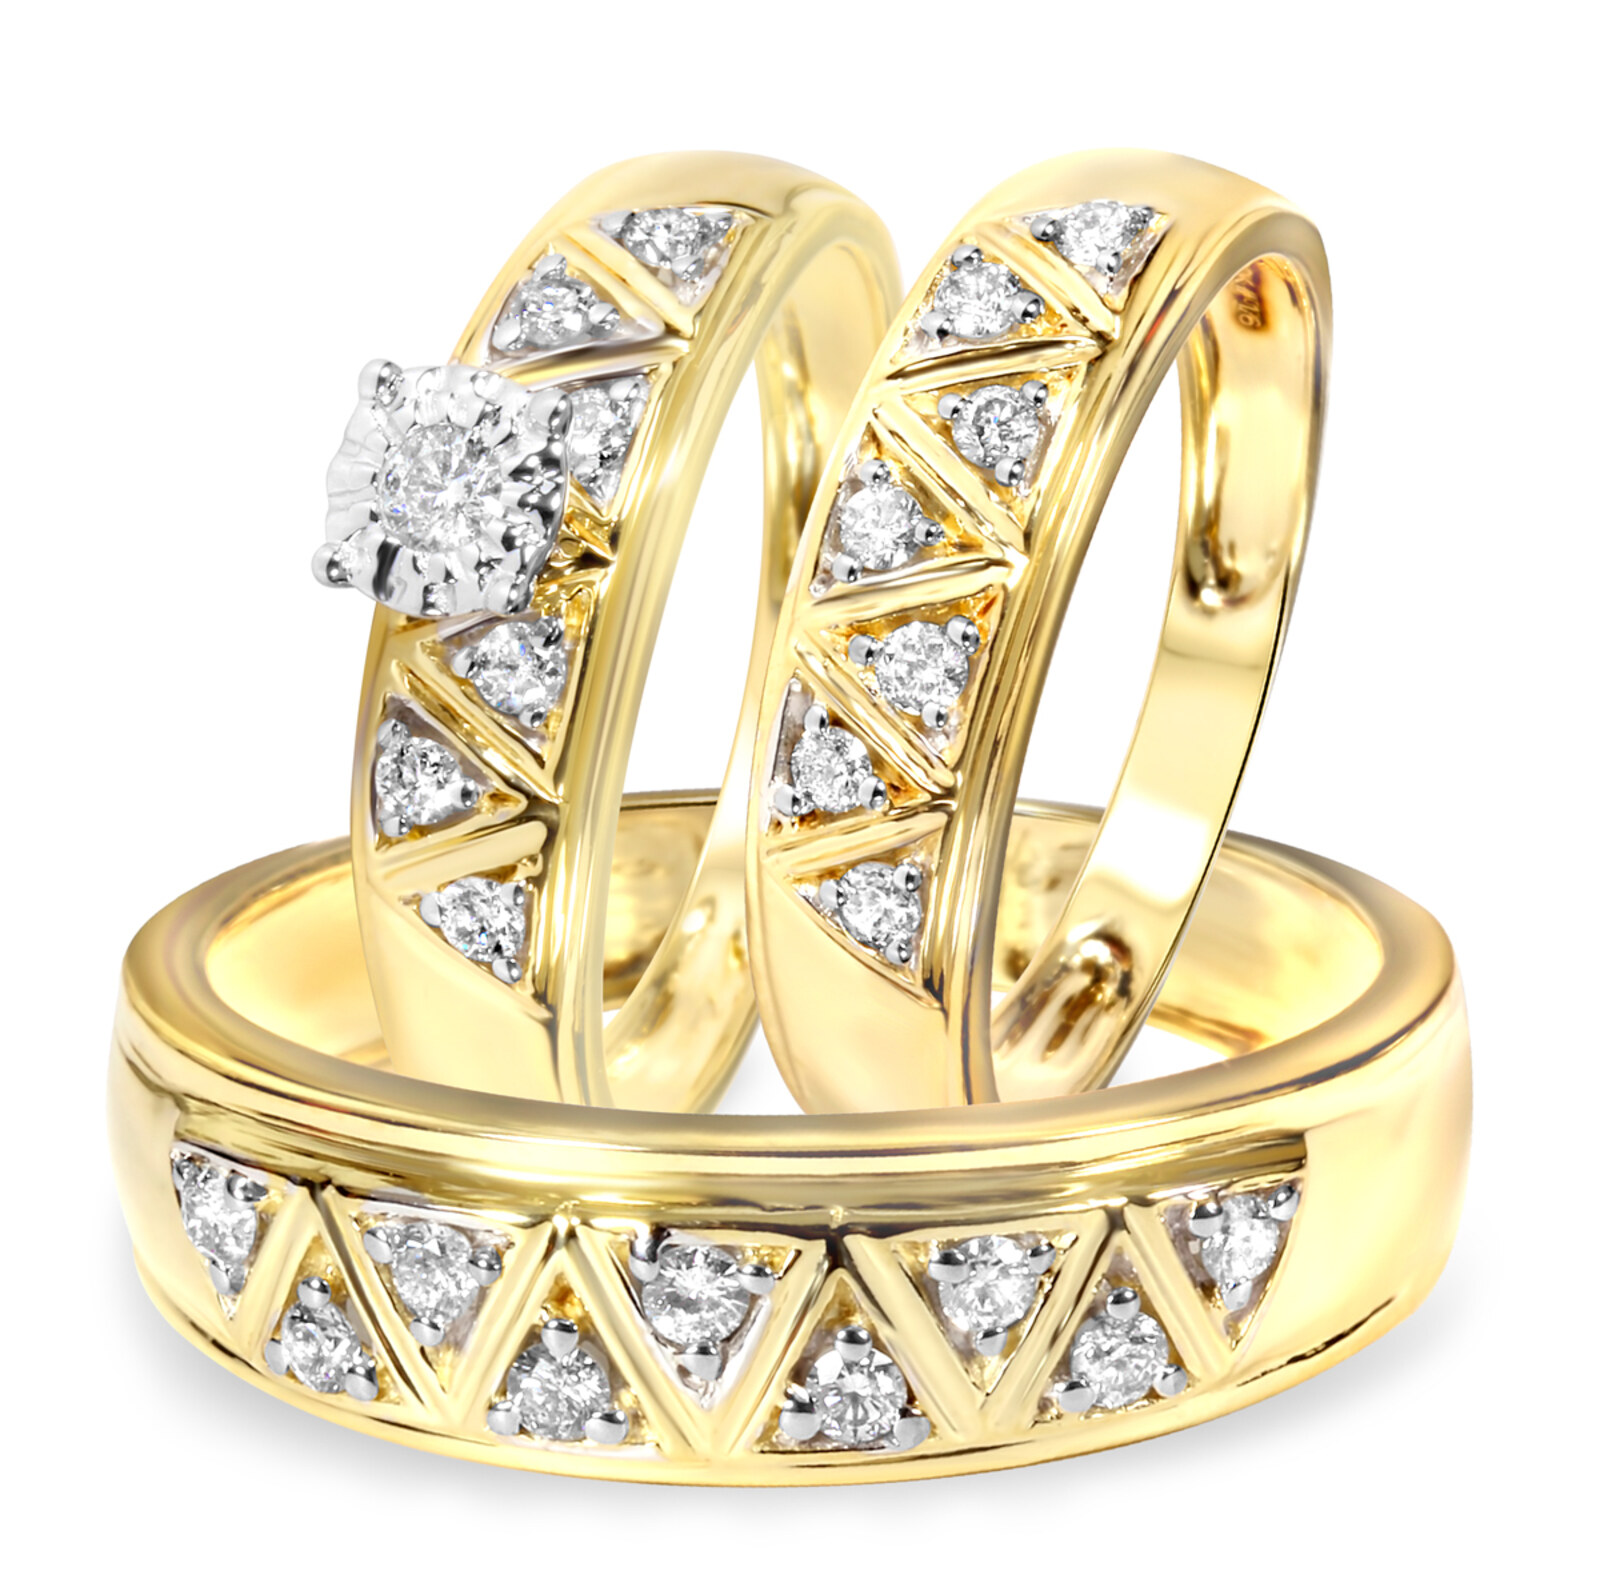 Unique Pear Cut Rose Quartz Engagement Ring Set 0.8Carat Diamond Band